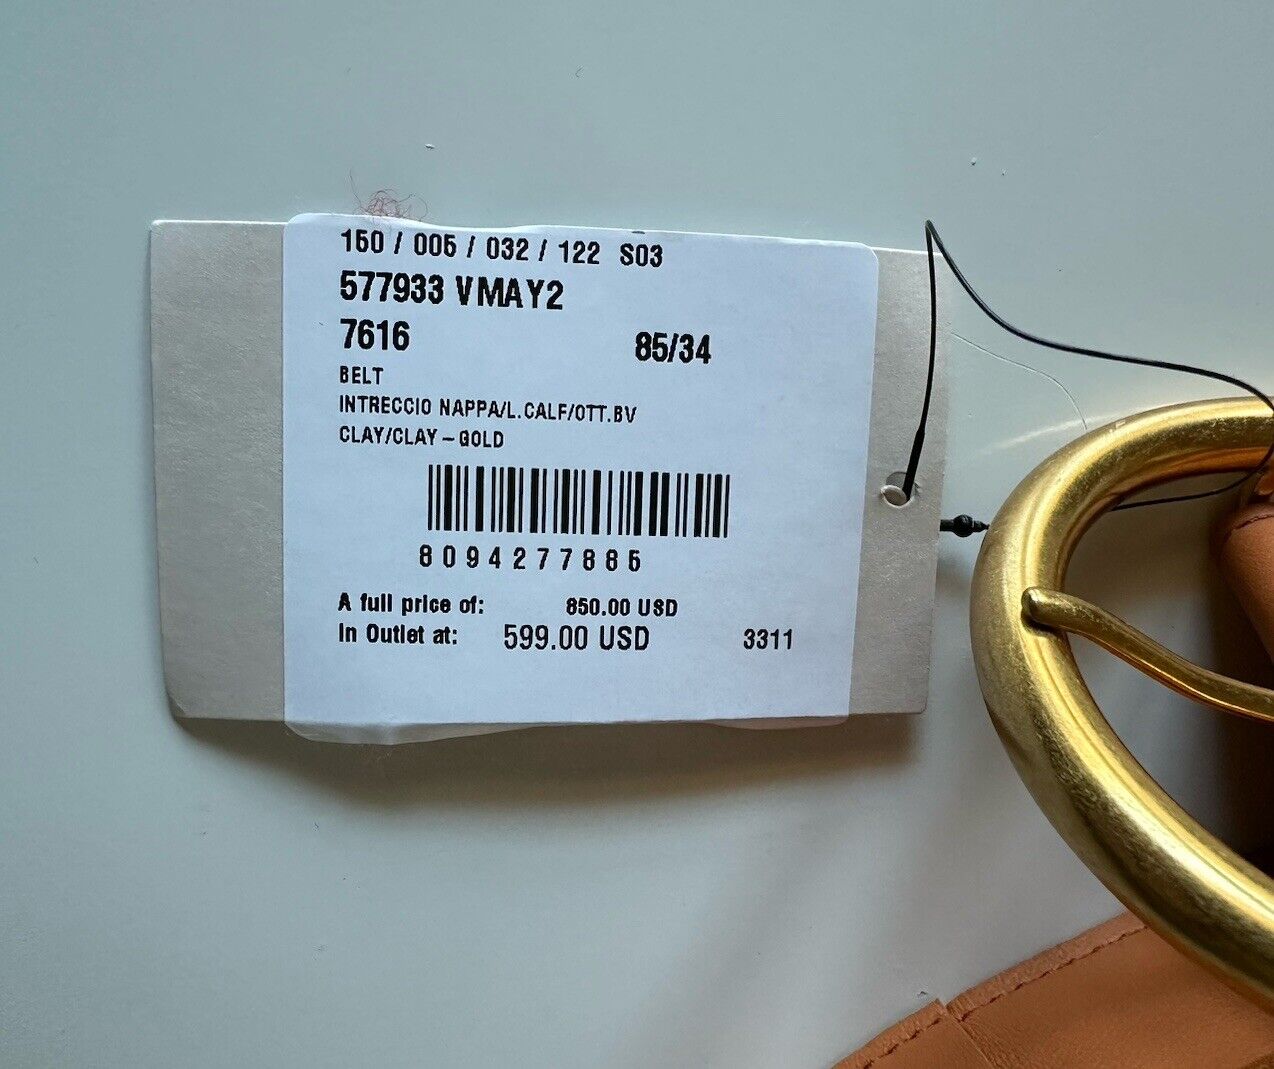 NWT $850 Bottega Veneta Intrecciato Nappa Leather Clay Belt 34/85 IT 577933